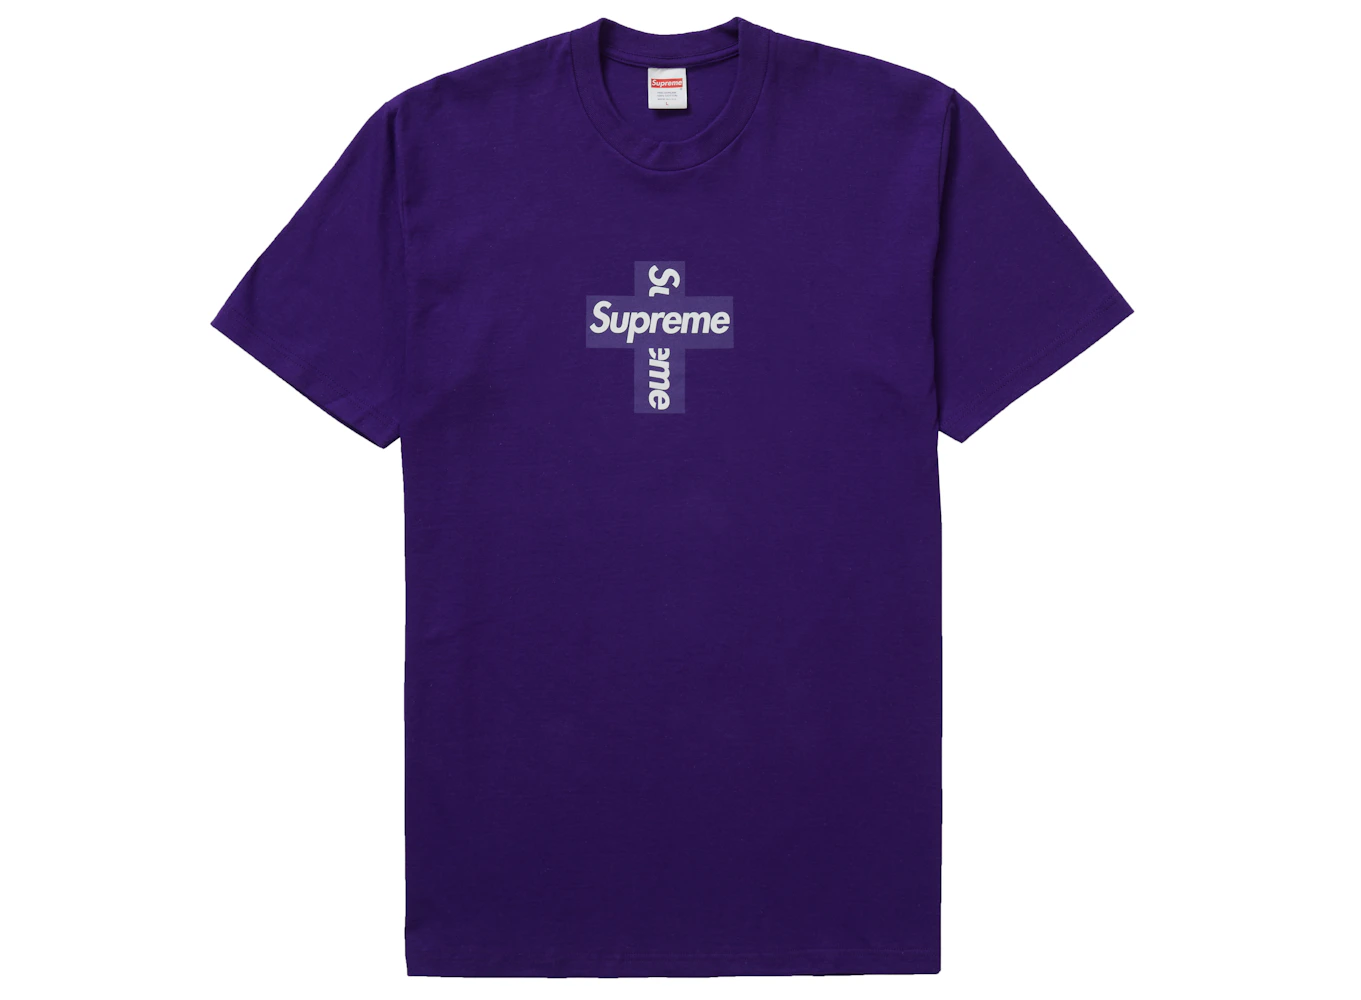 Info on Purple on Black Box Logo tee? : r/supremeclothing